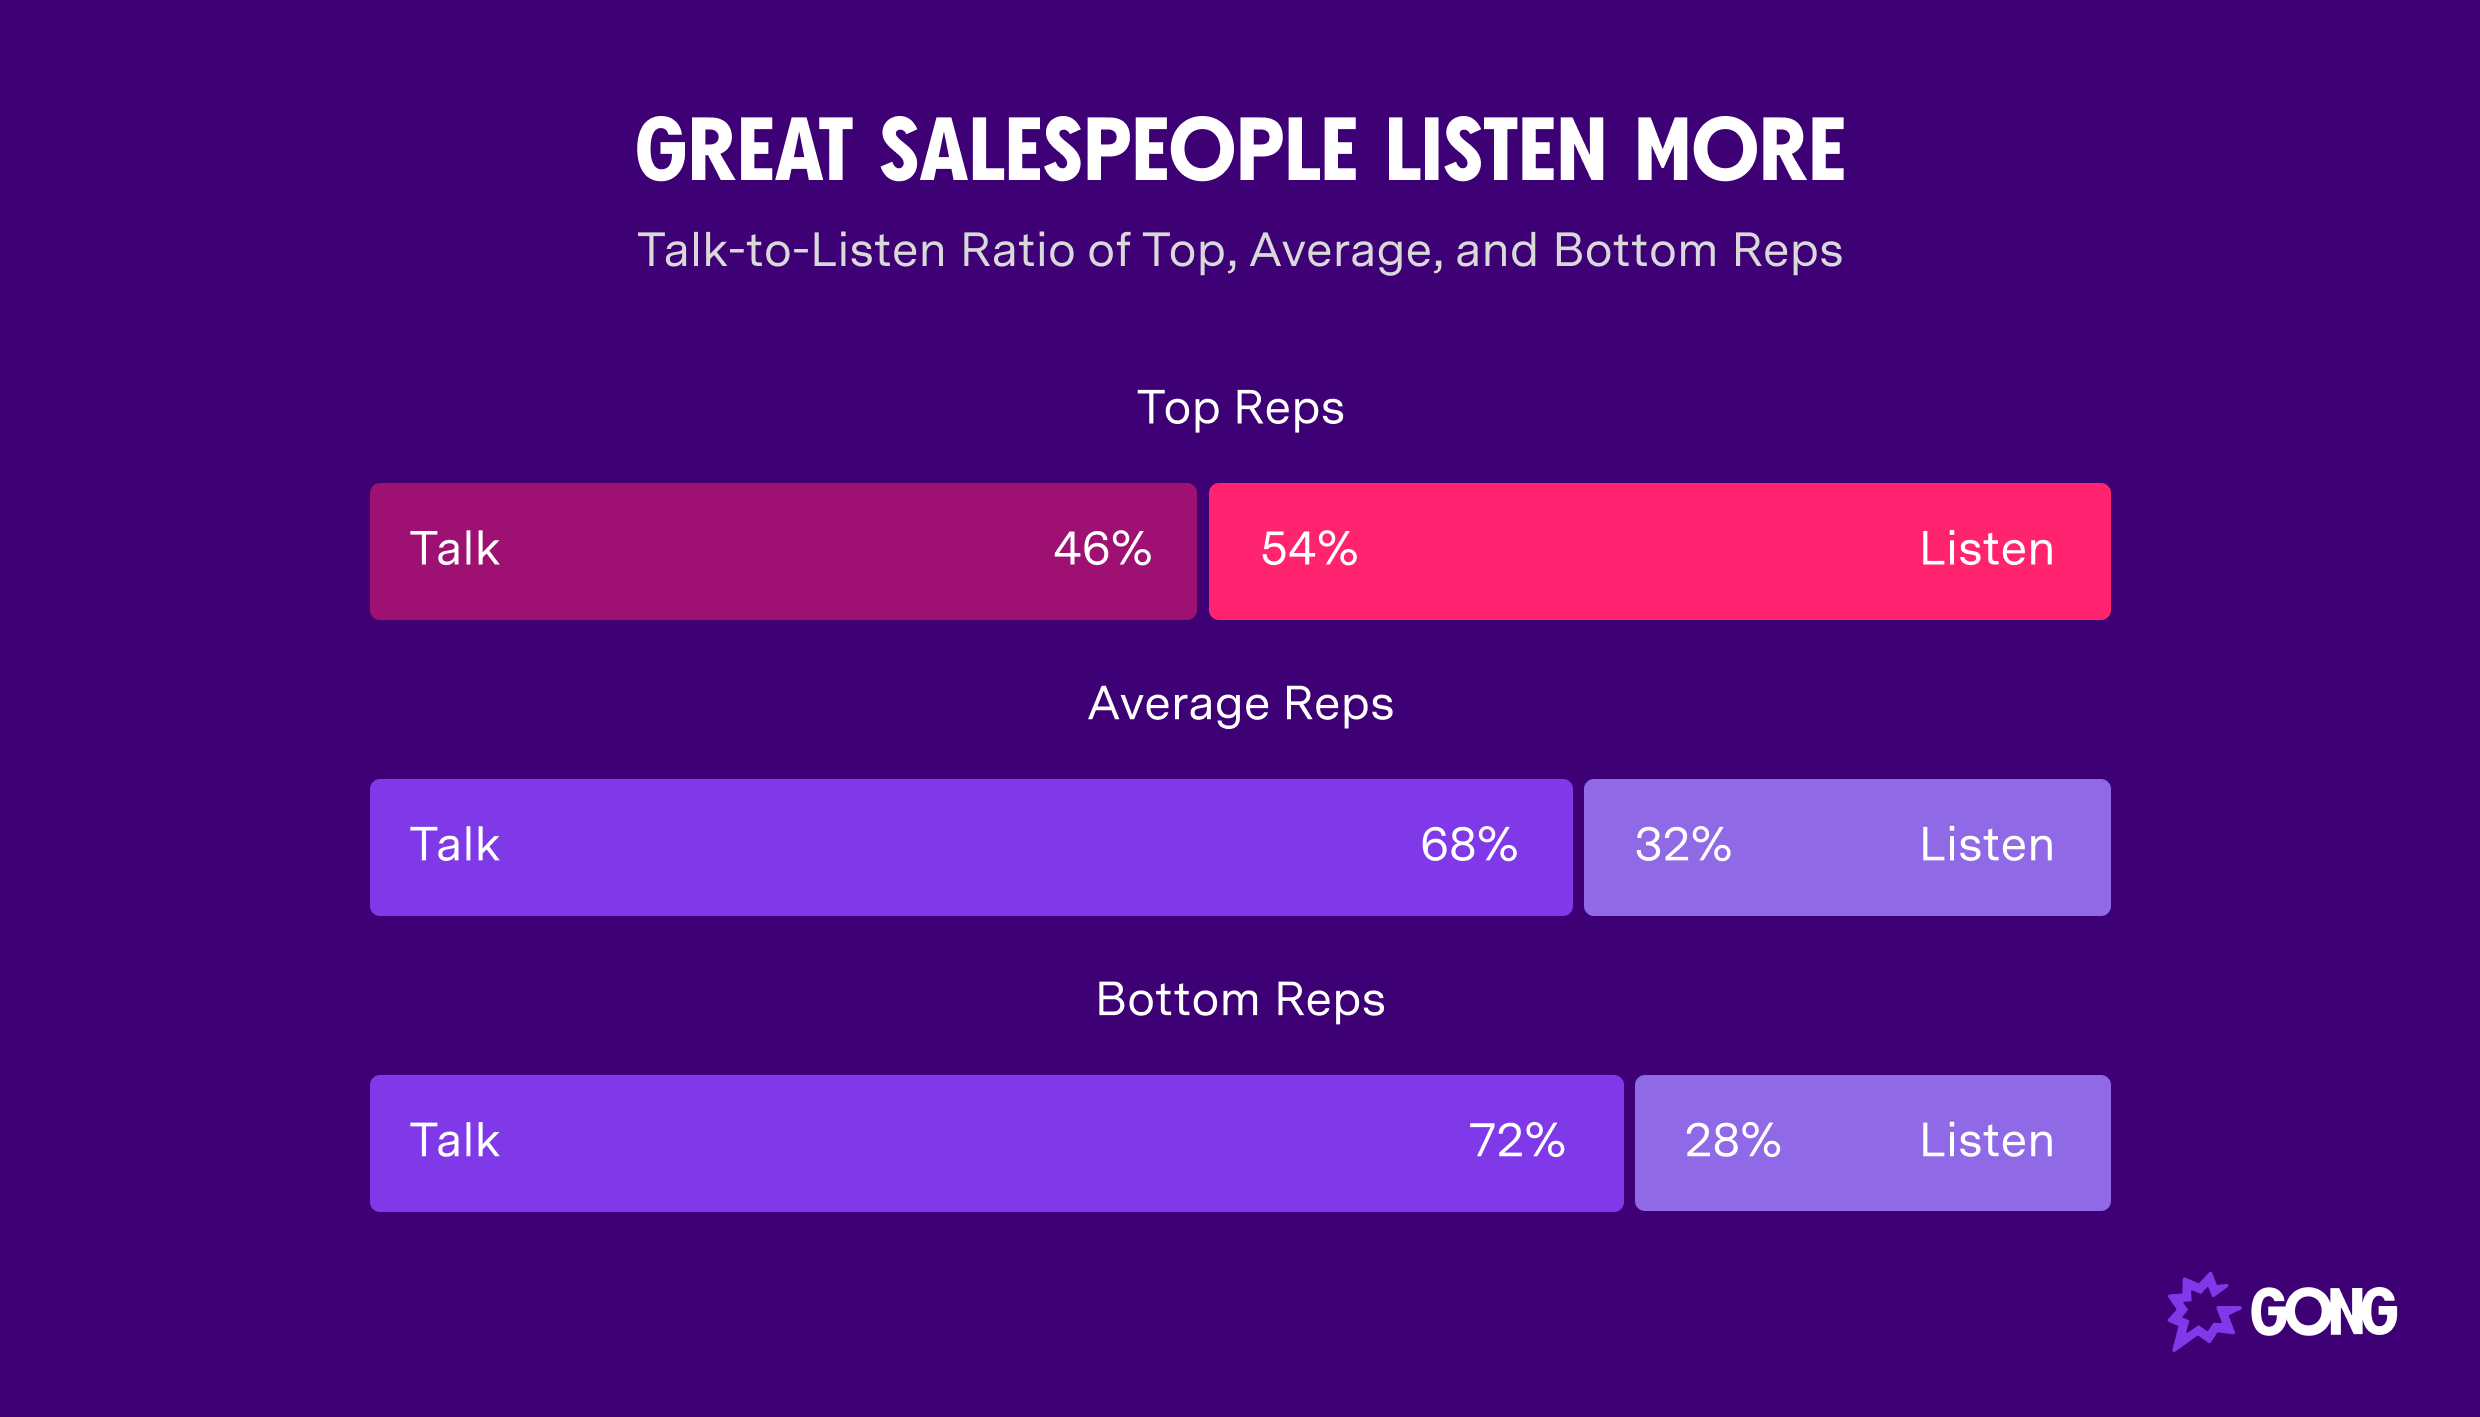 Top-performing sales reps listen more